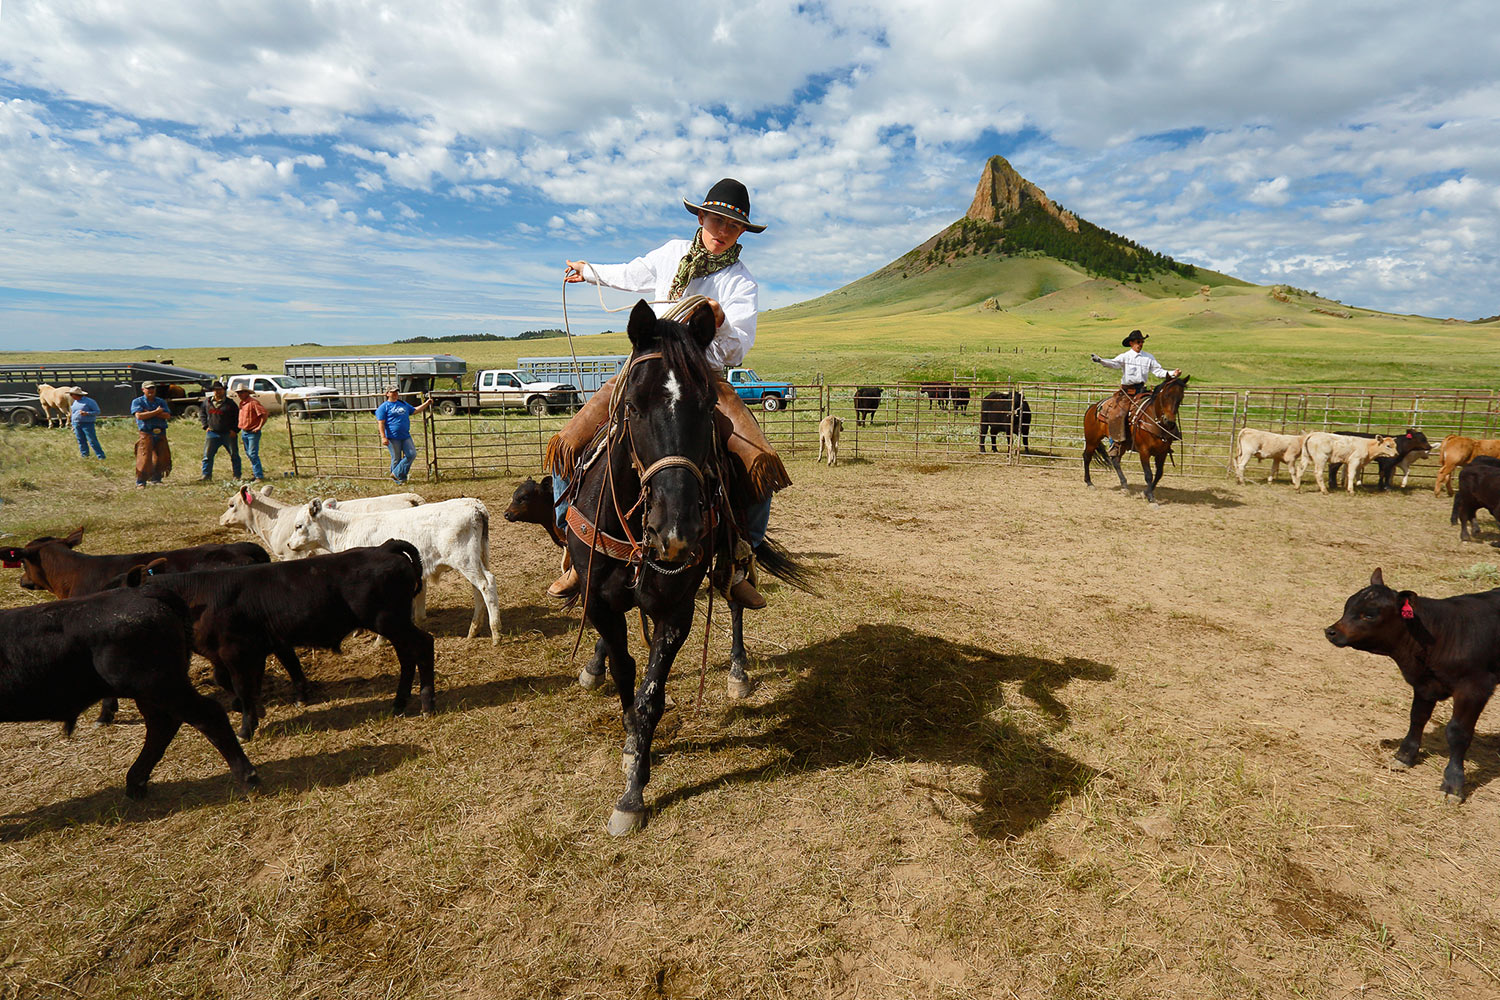 &nbsp;&nbsp;A young cowboy ropes cattle inside the corral near Lloyd, Montana.&nbsp;→ License Photo